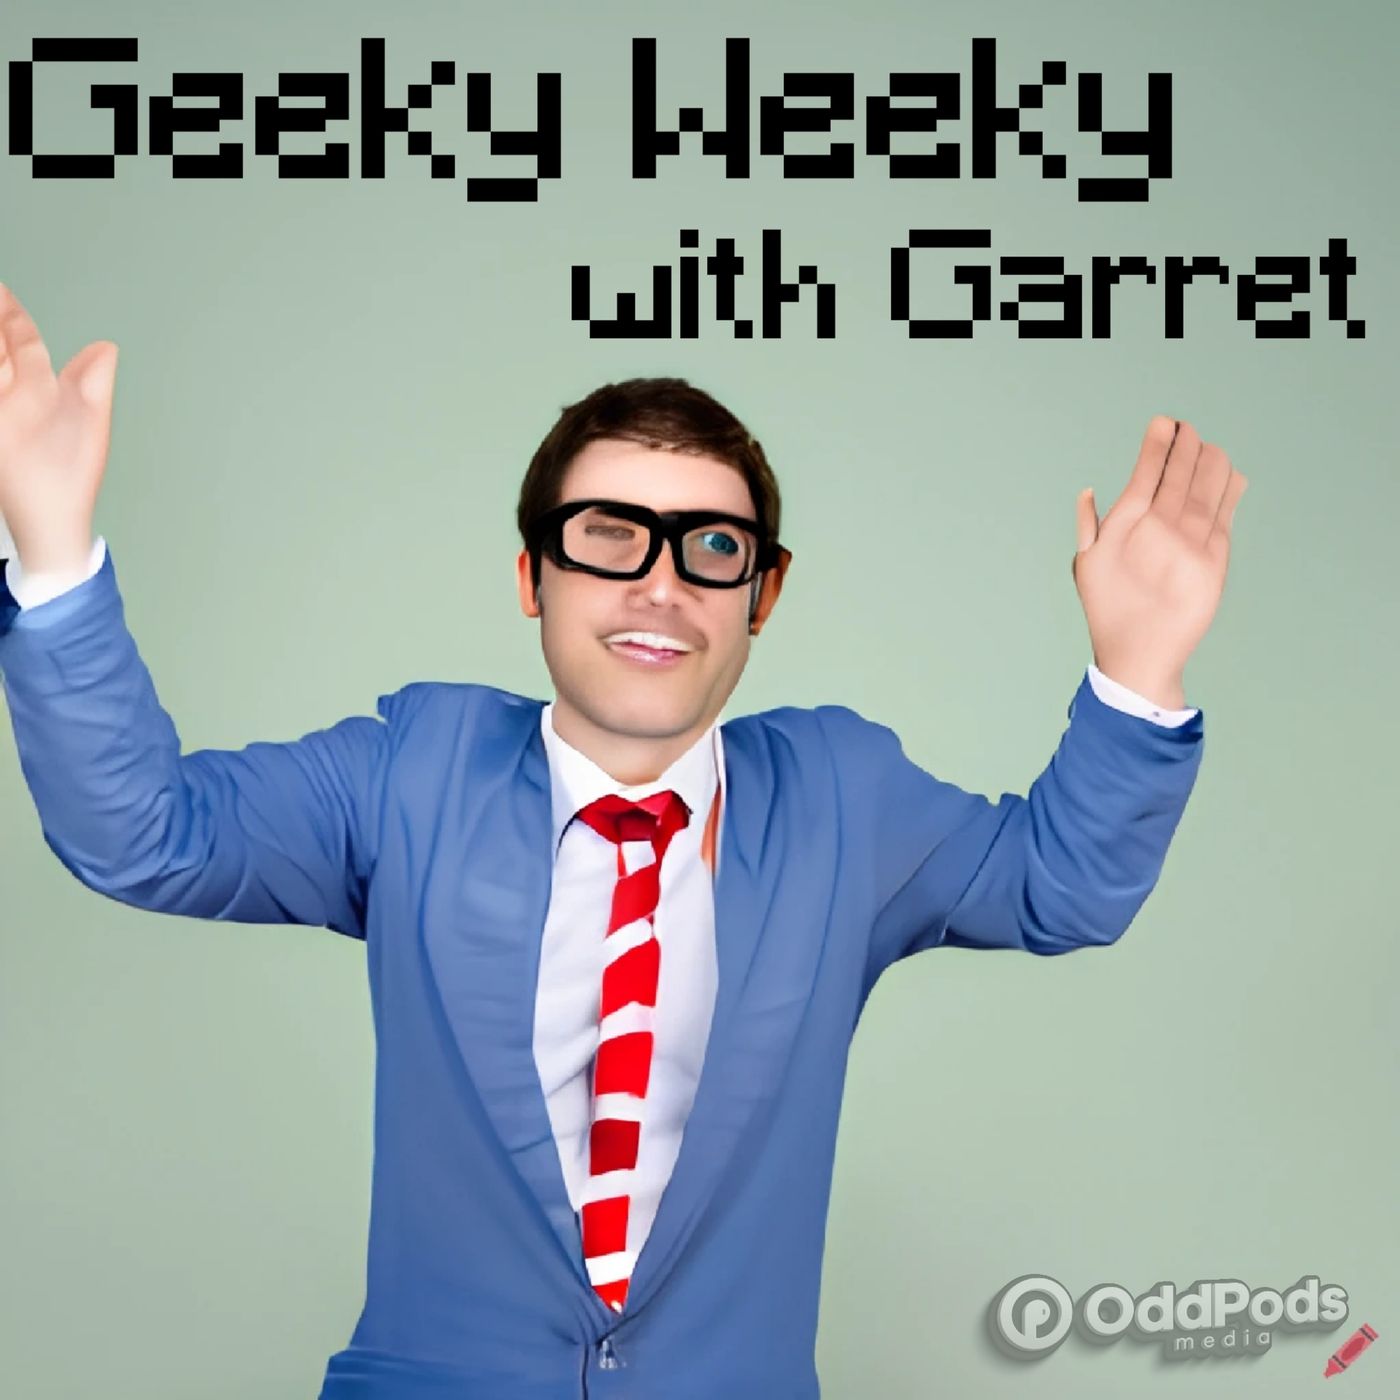 Geeky Weeky: Mayhem and Tears